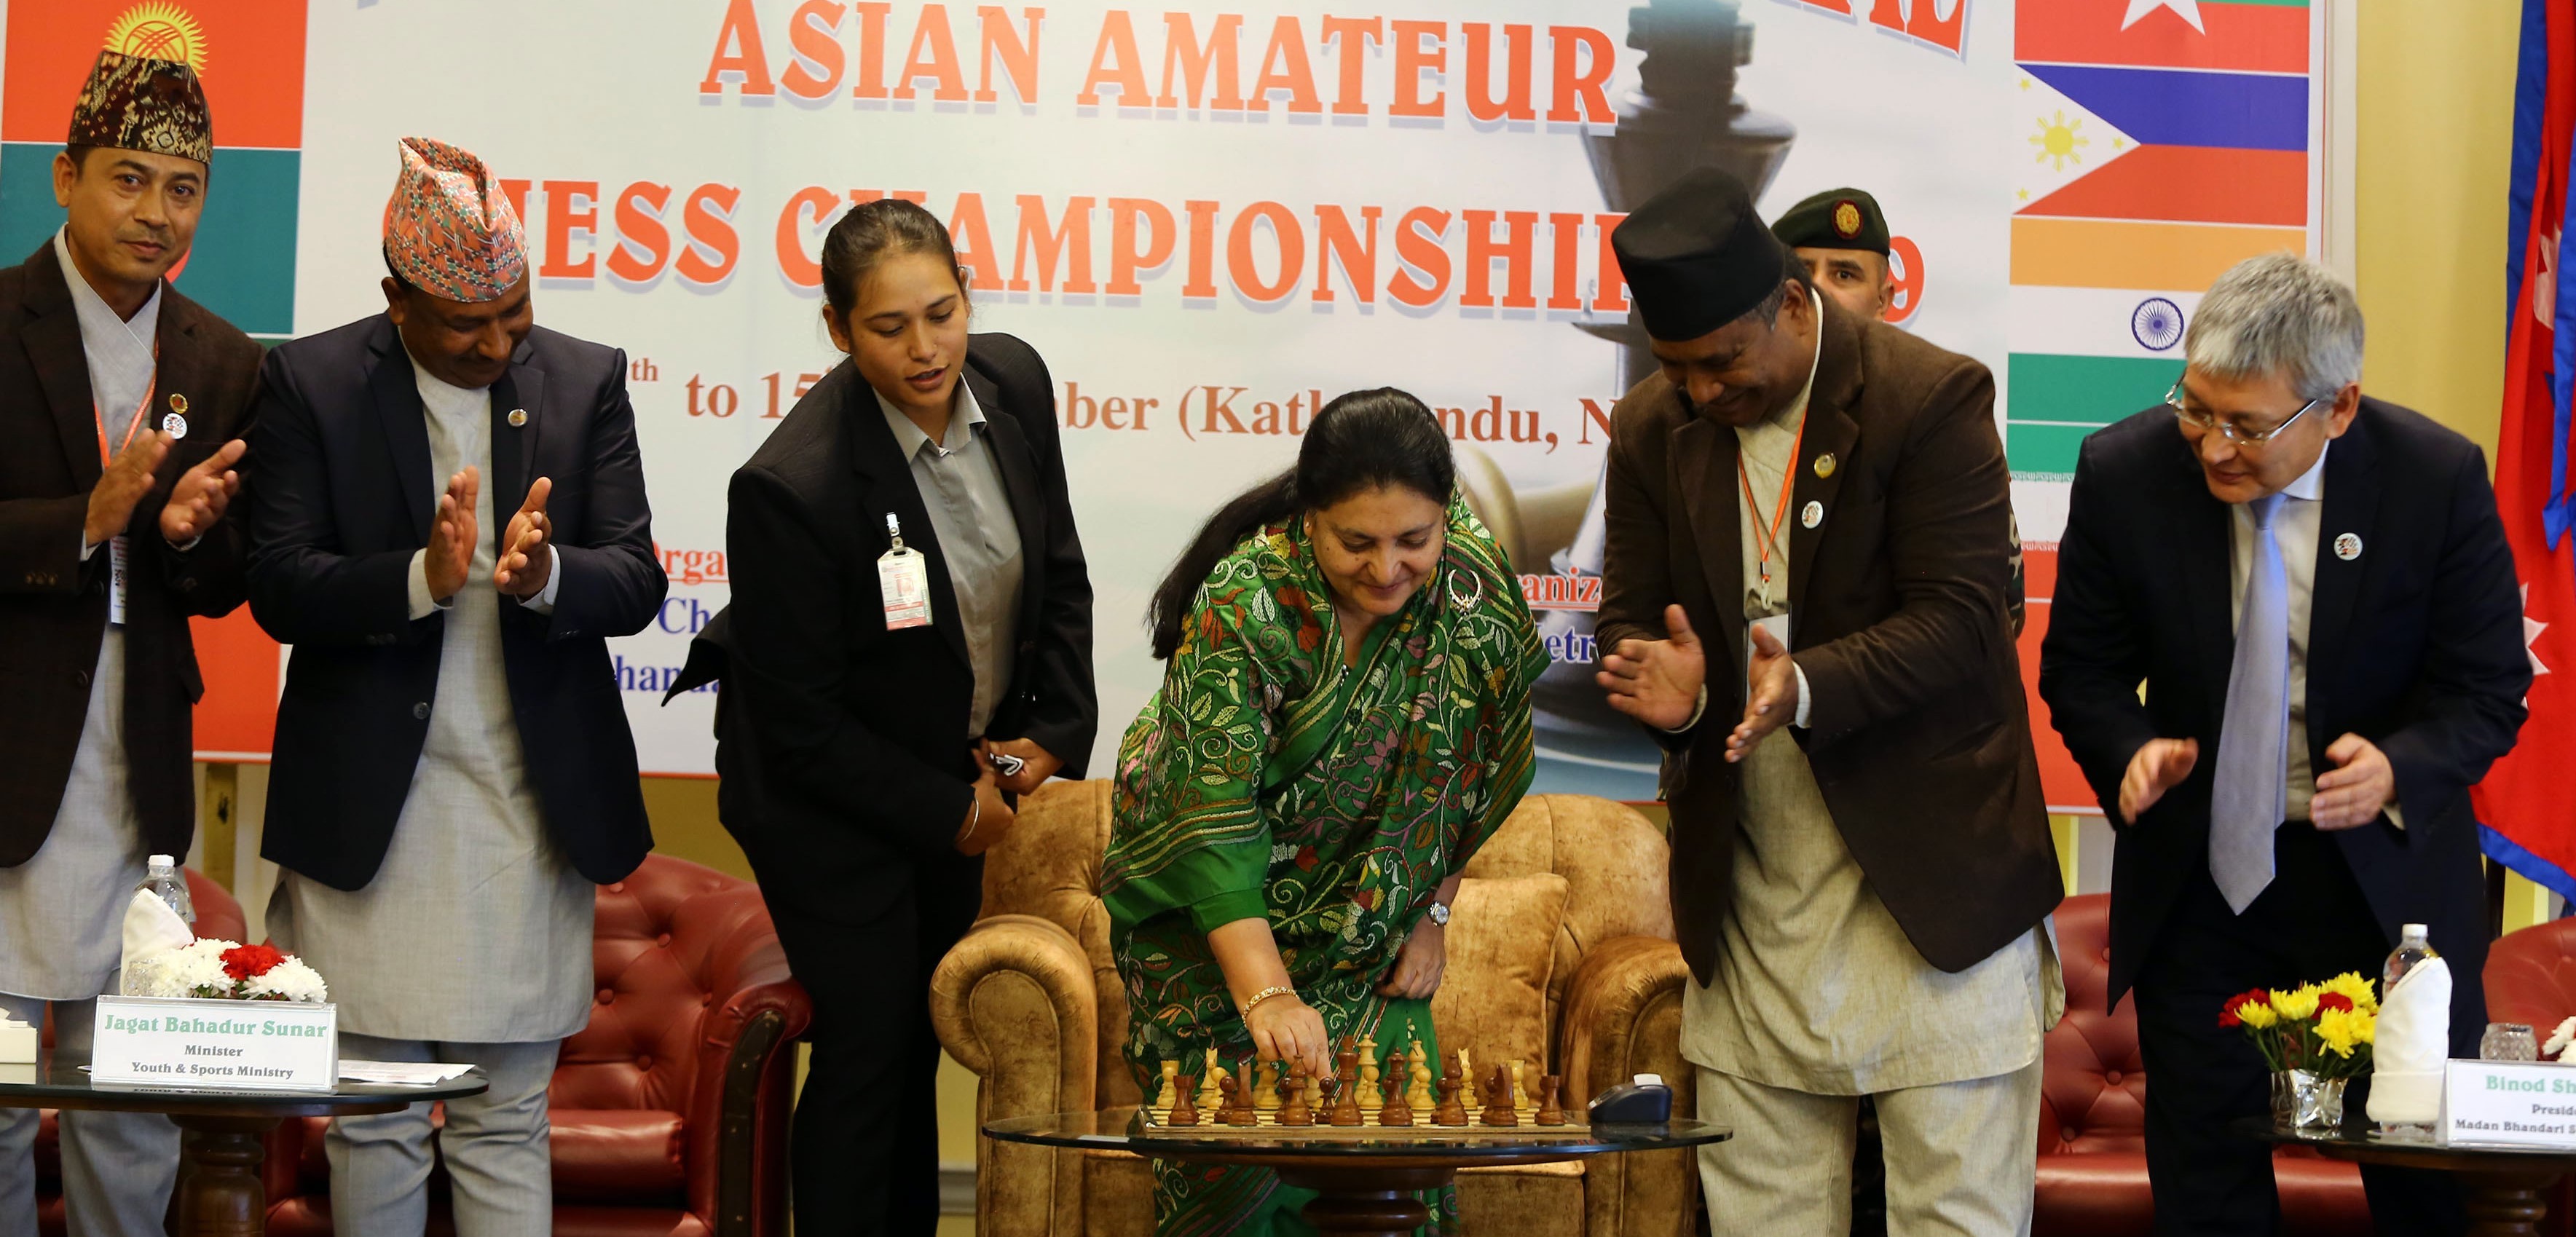 president-bhandari-is-inaugurating-asian-amateur-chess-championship-in-kathmandu